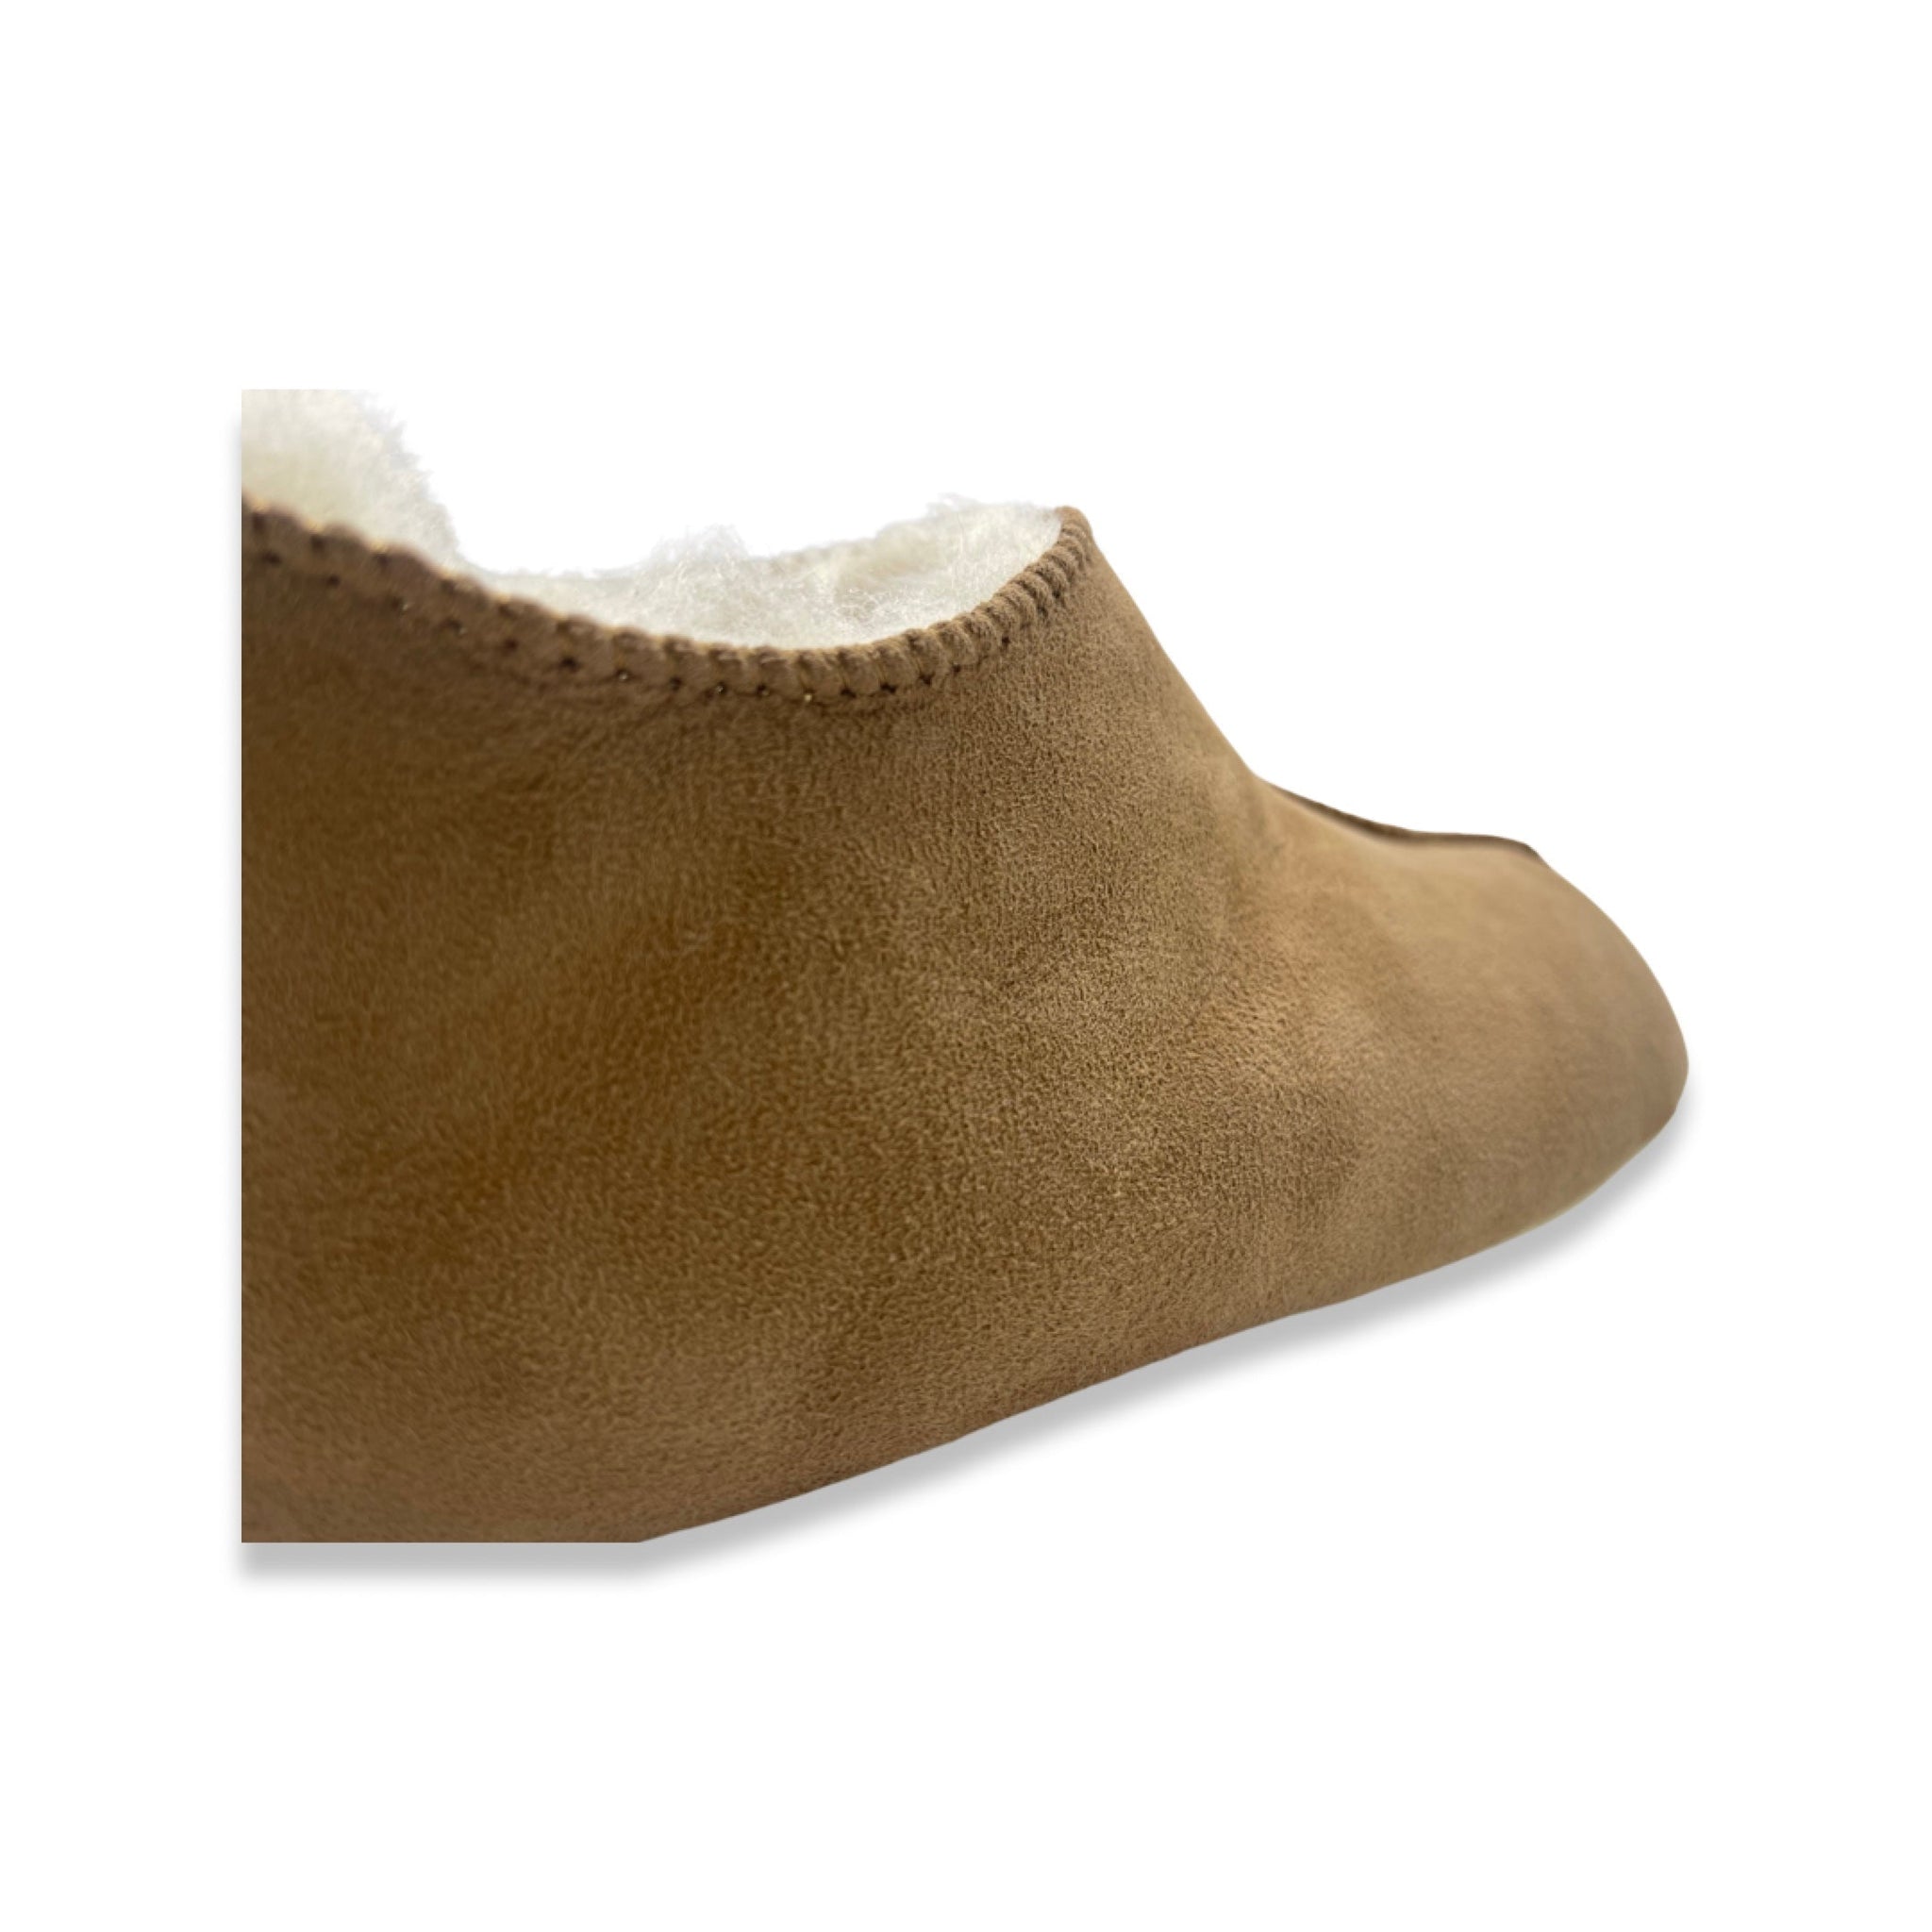 NAT 2 fodtøj thies 1856 ® Sheep Slipper Boot cashew (W) bæredygtig mode etisk mode